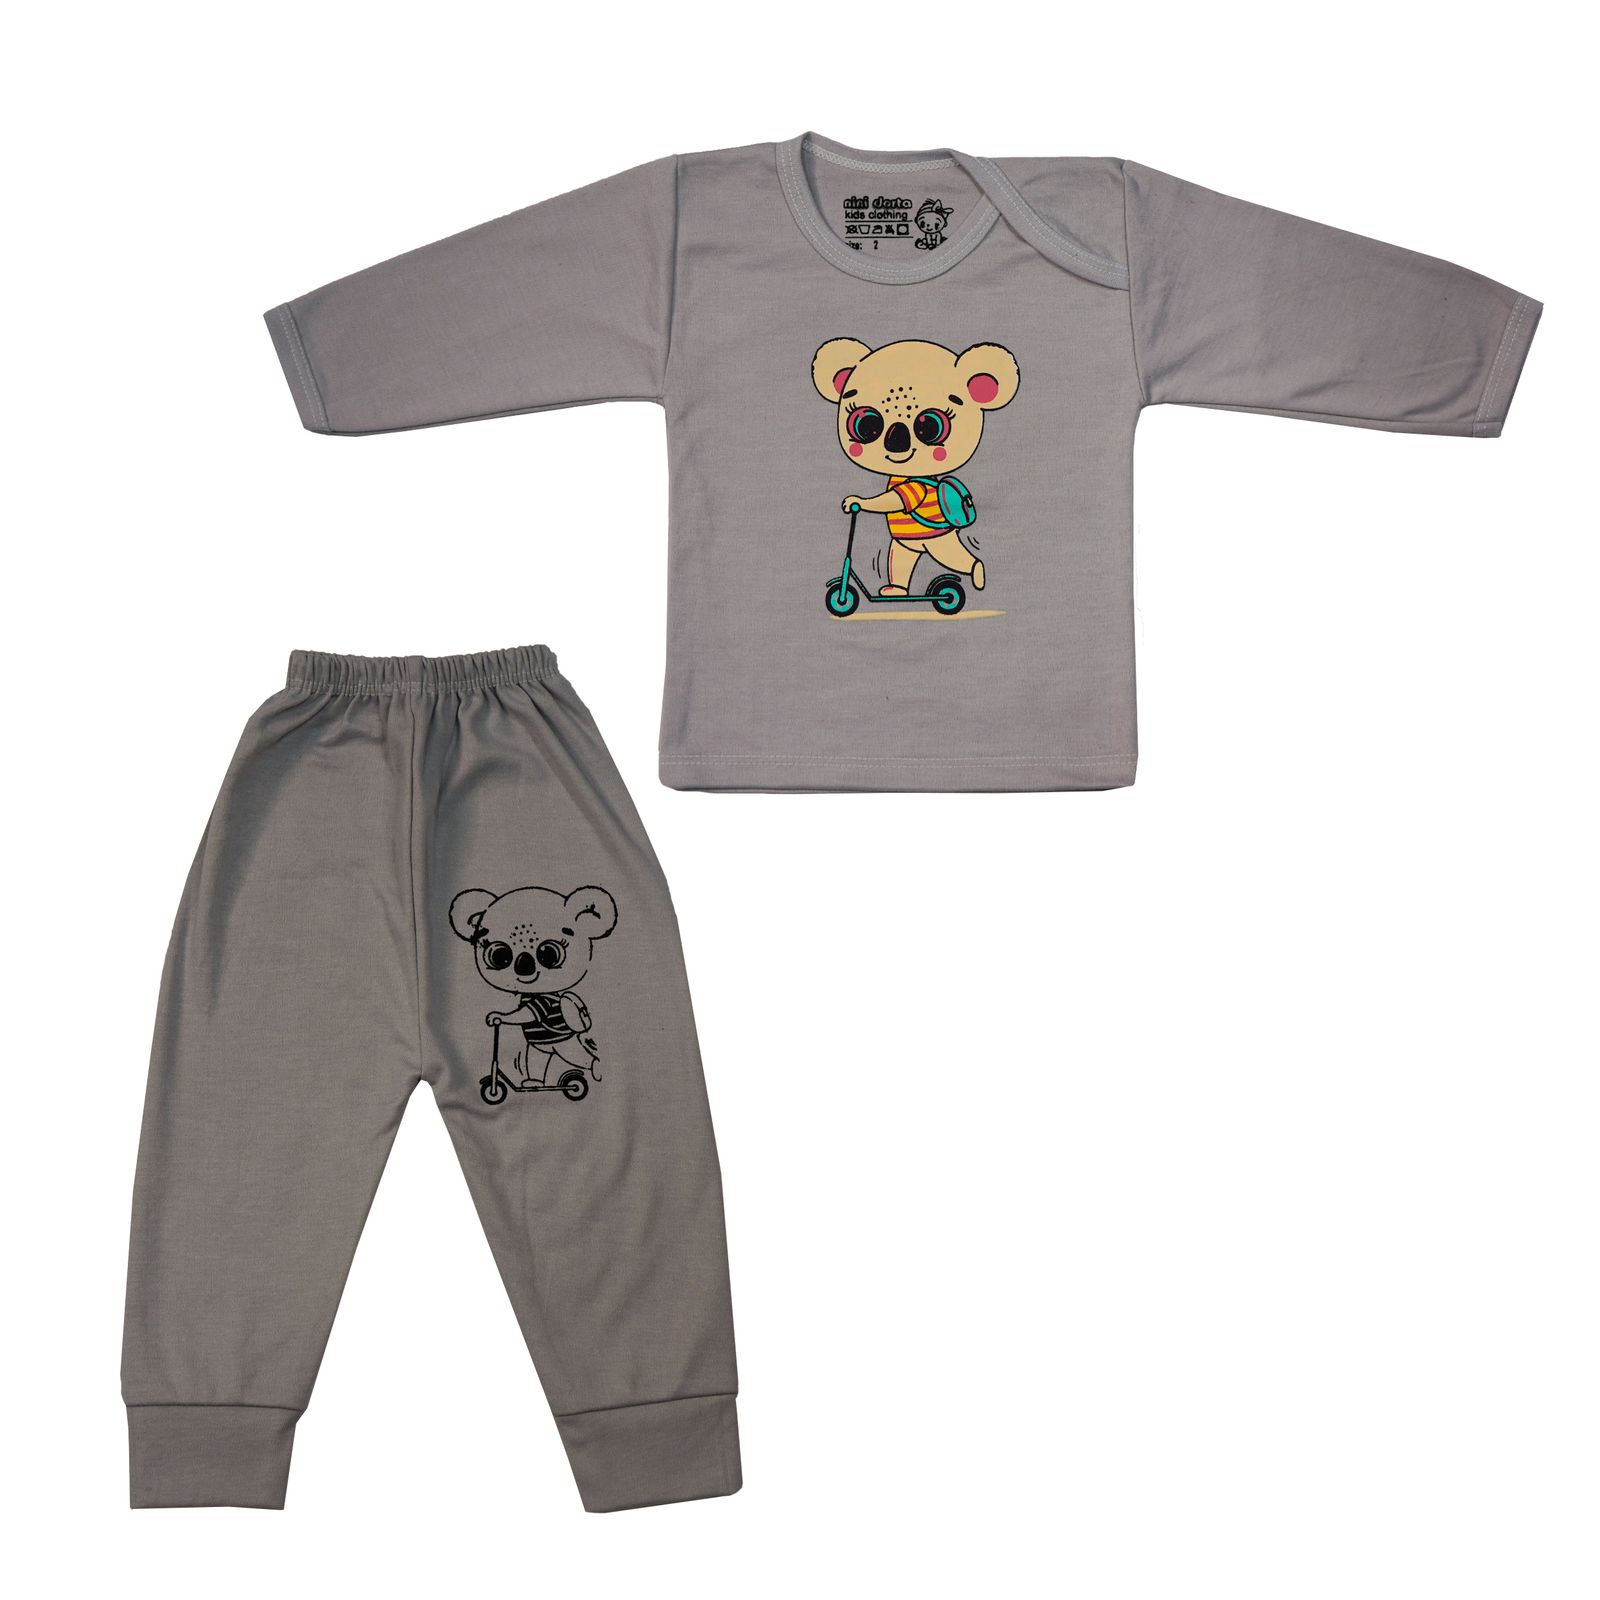 ست تی شرت و شلوار نوزادی مدل خرس اسکوترسوار -  - 1